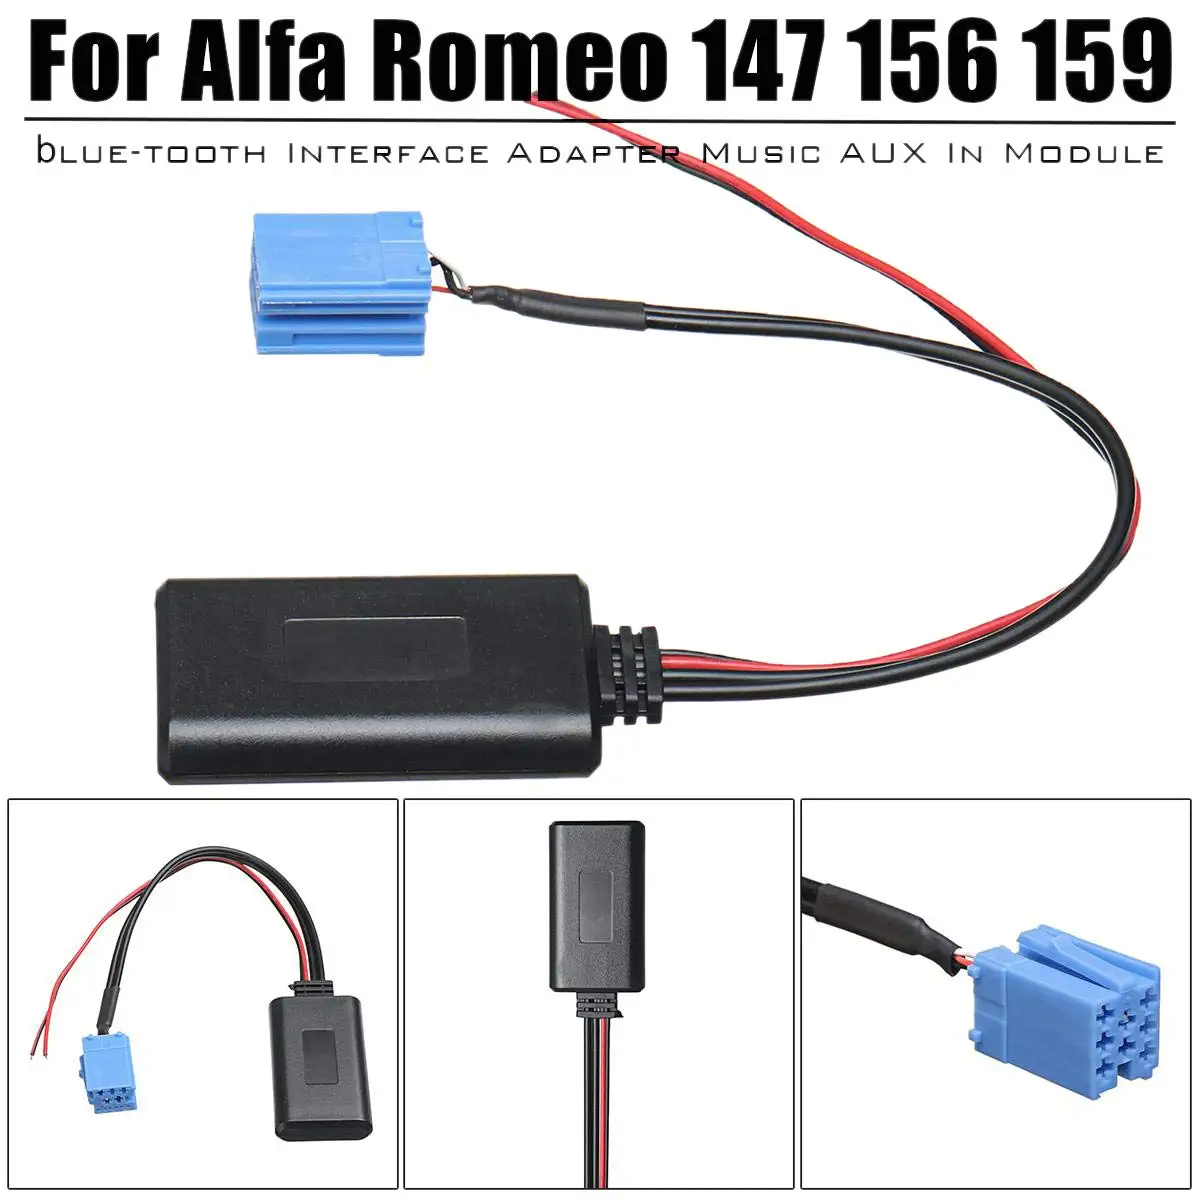 Alfa Romeo 159 aux input lead RCA CT29AR01 in car radio iPhone MP3 adapter 2006> 